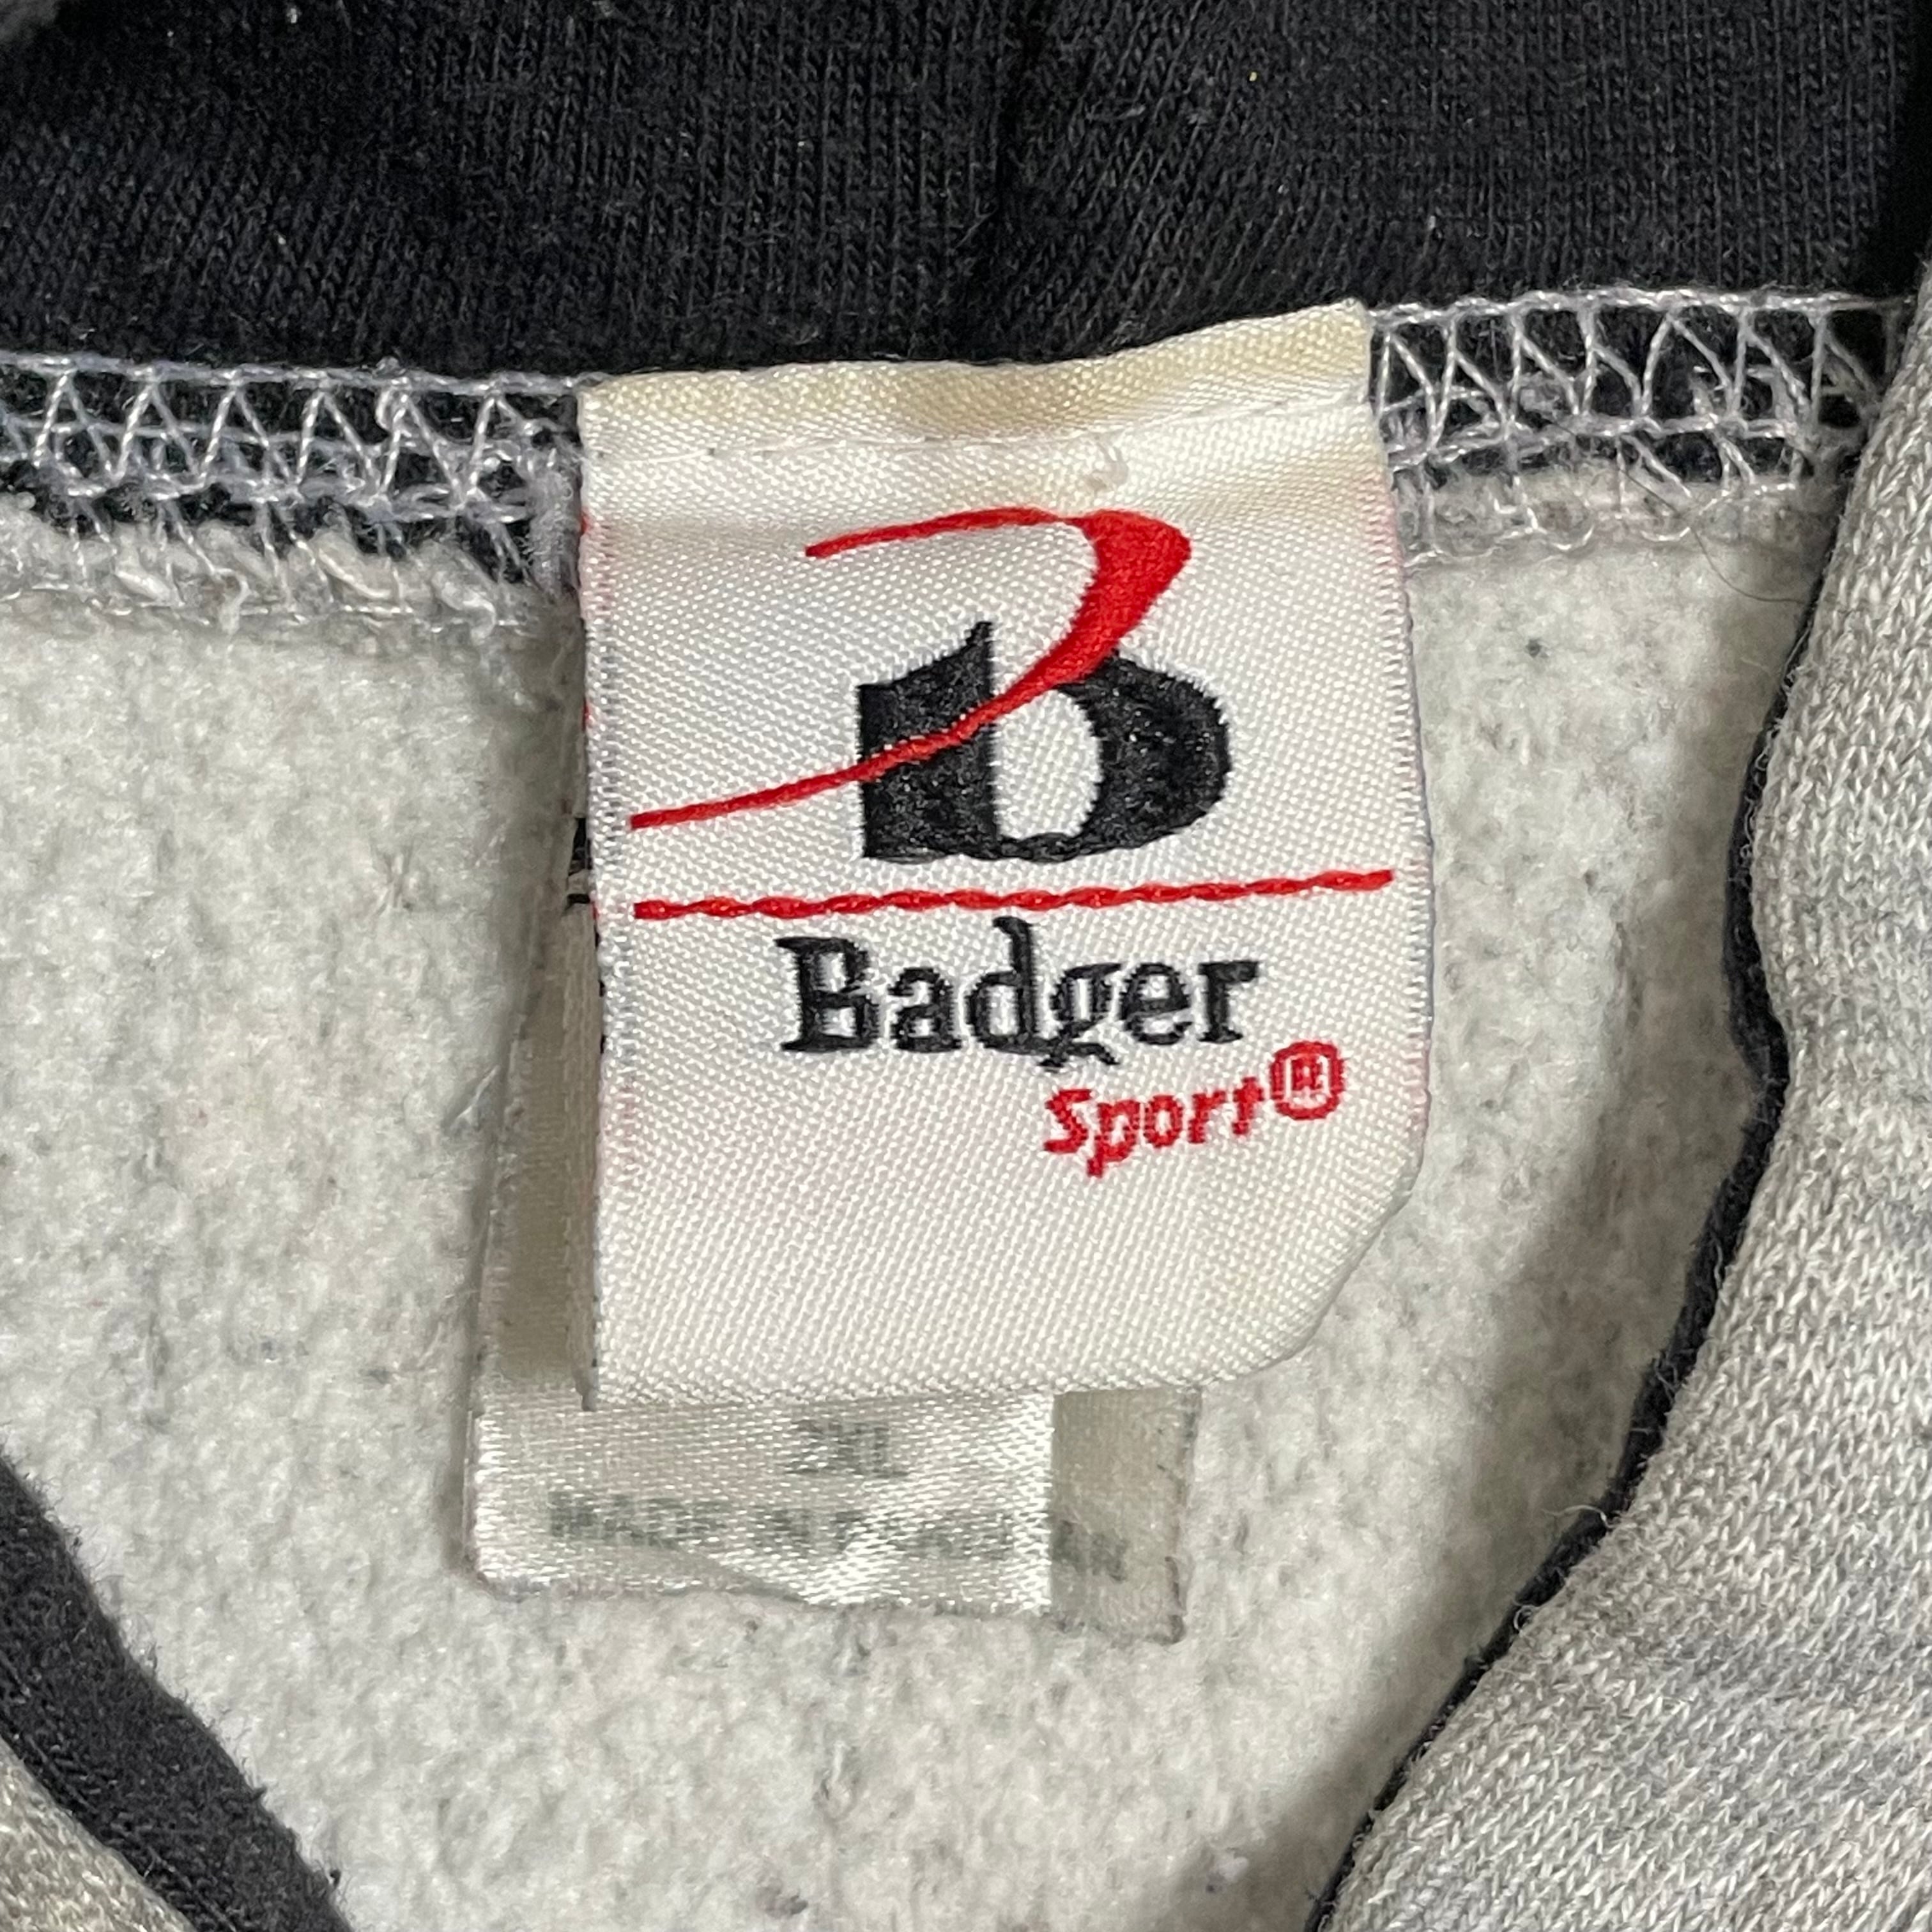 Badger Sport】カレッジ フットボール ワンポイント 刺繍ロゴ パーカー ...